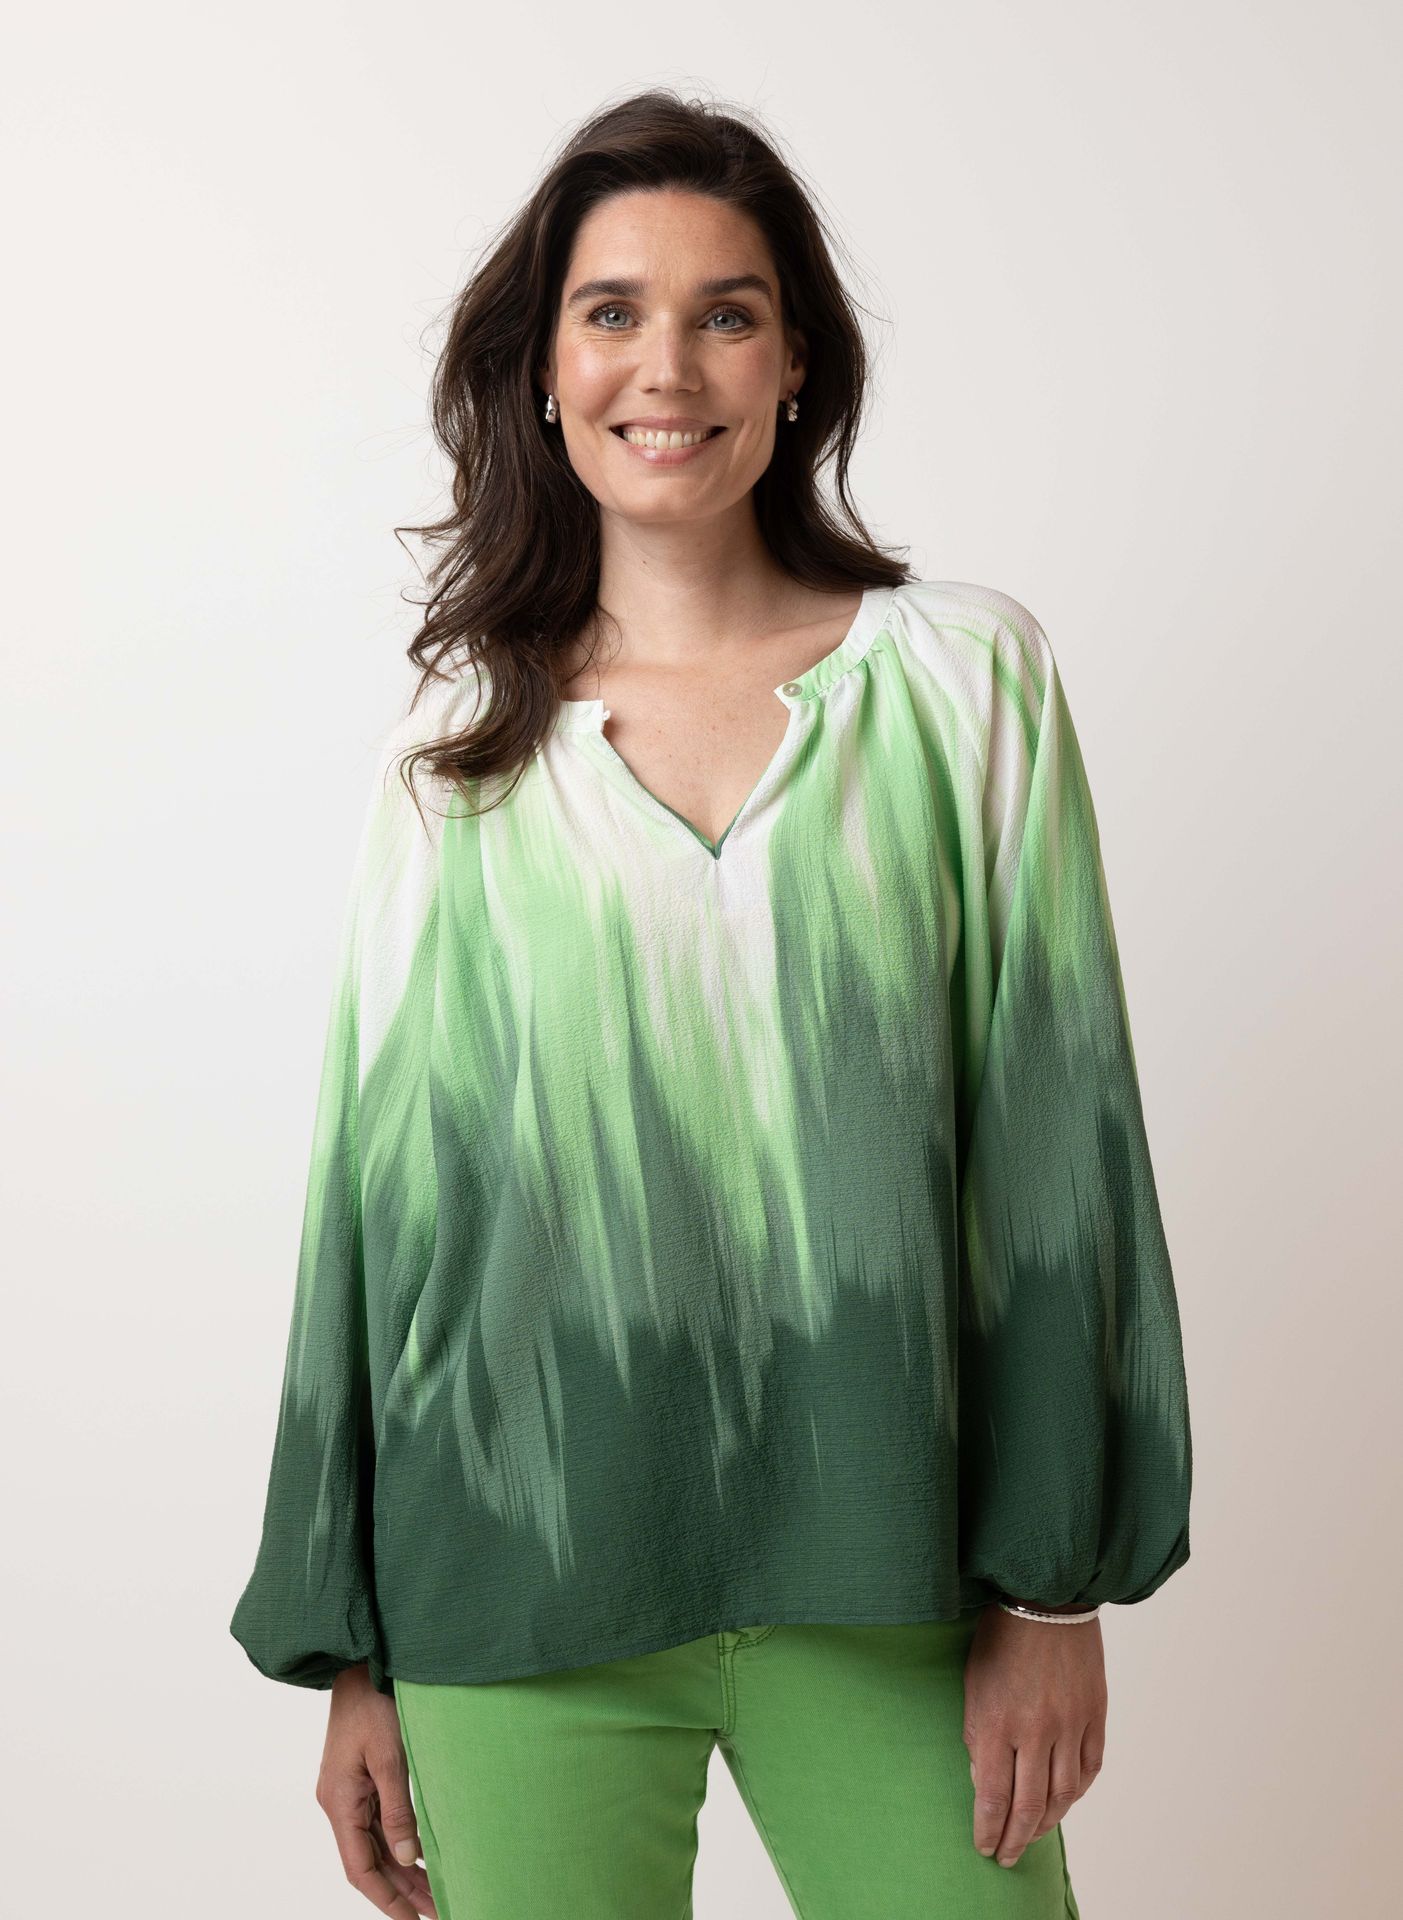 Norah Groene blouse green multicolor 214338-520